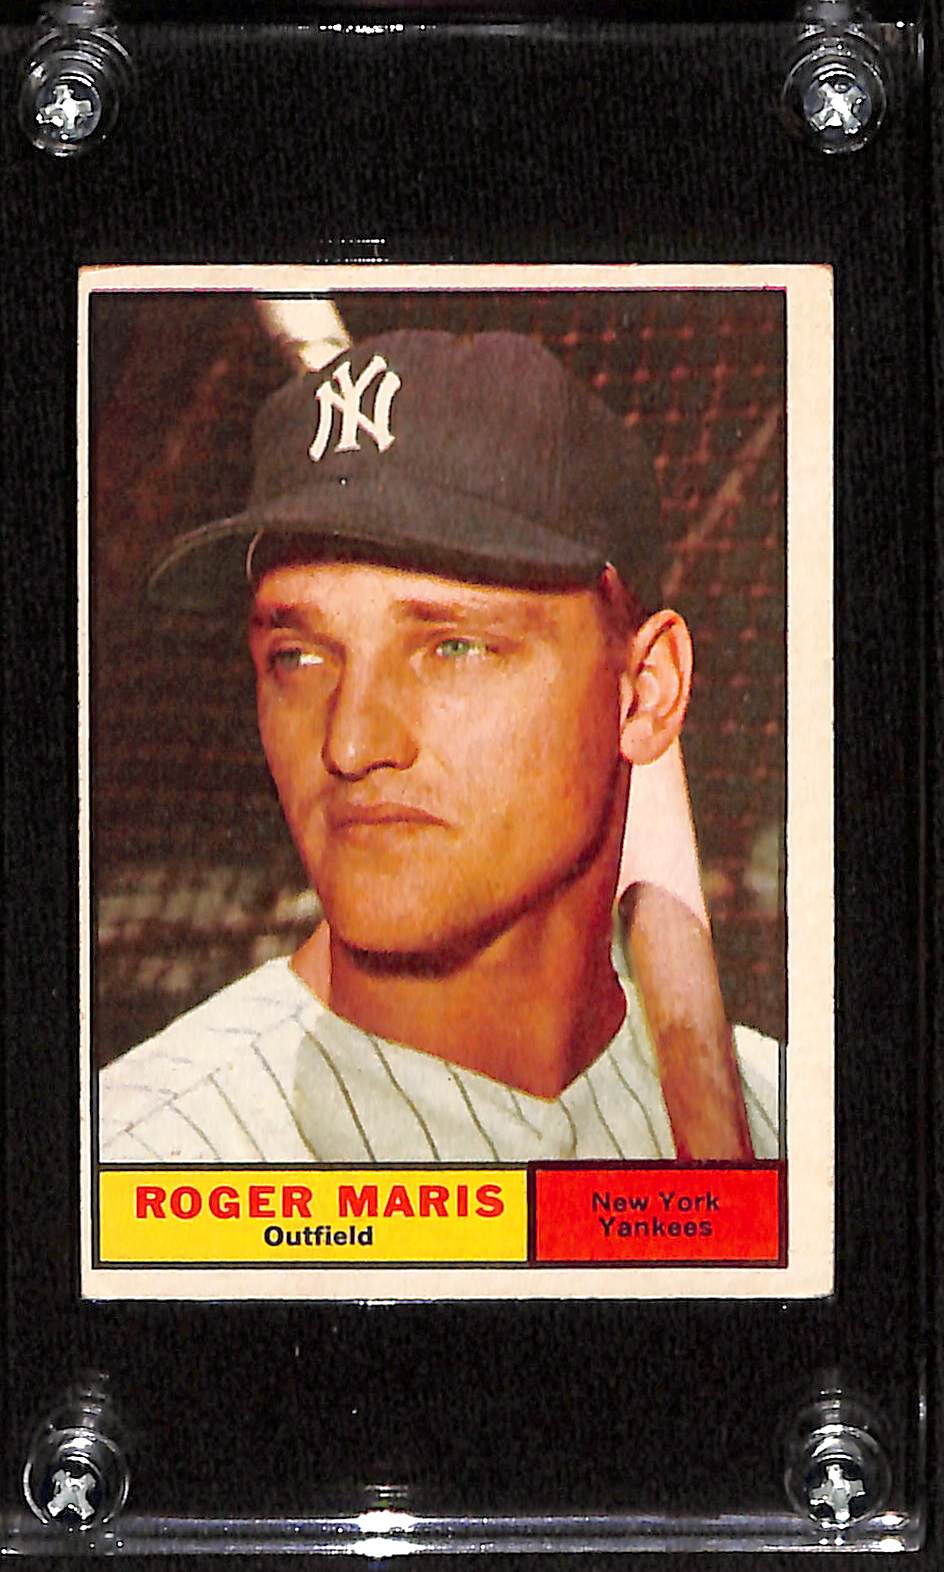 FIINR Baseball Card 1961 Topps Roger Maris Vintage Baseball Card Yankees #2 - Error Miss Cut Card - Mint Condition